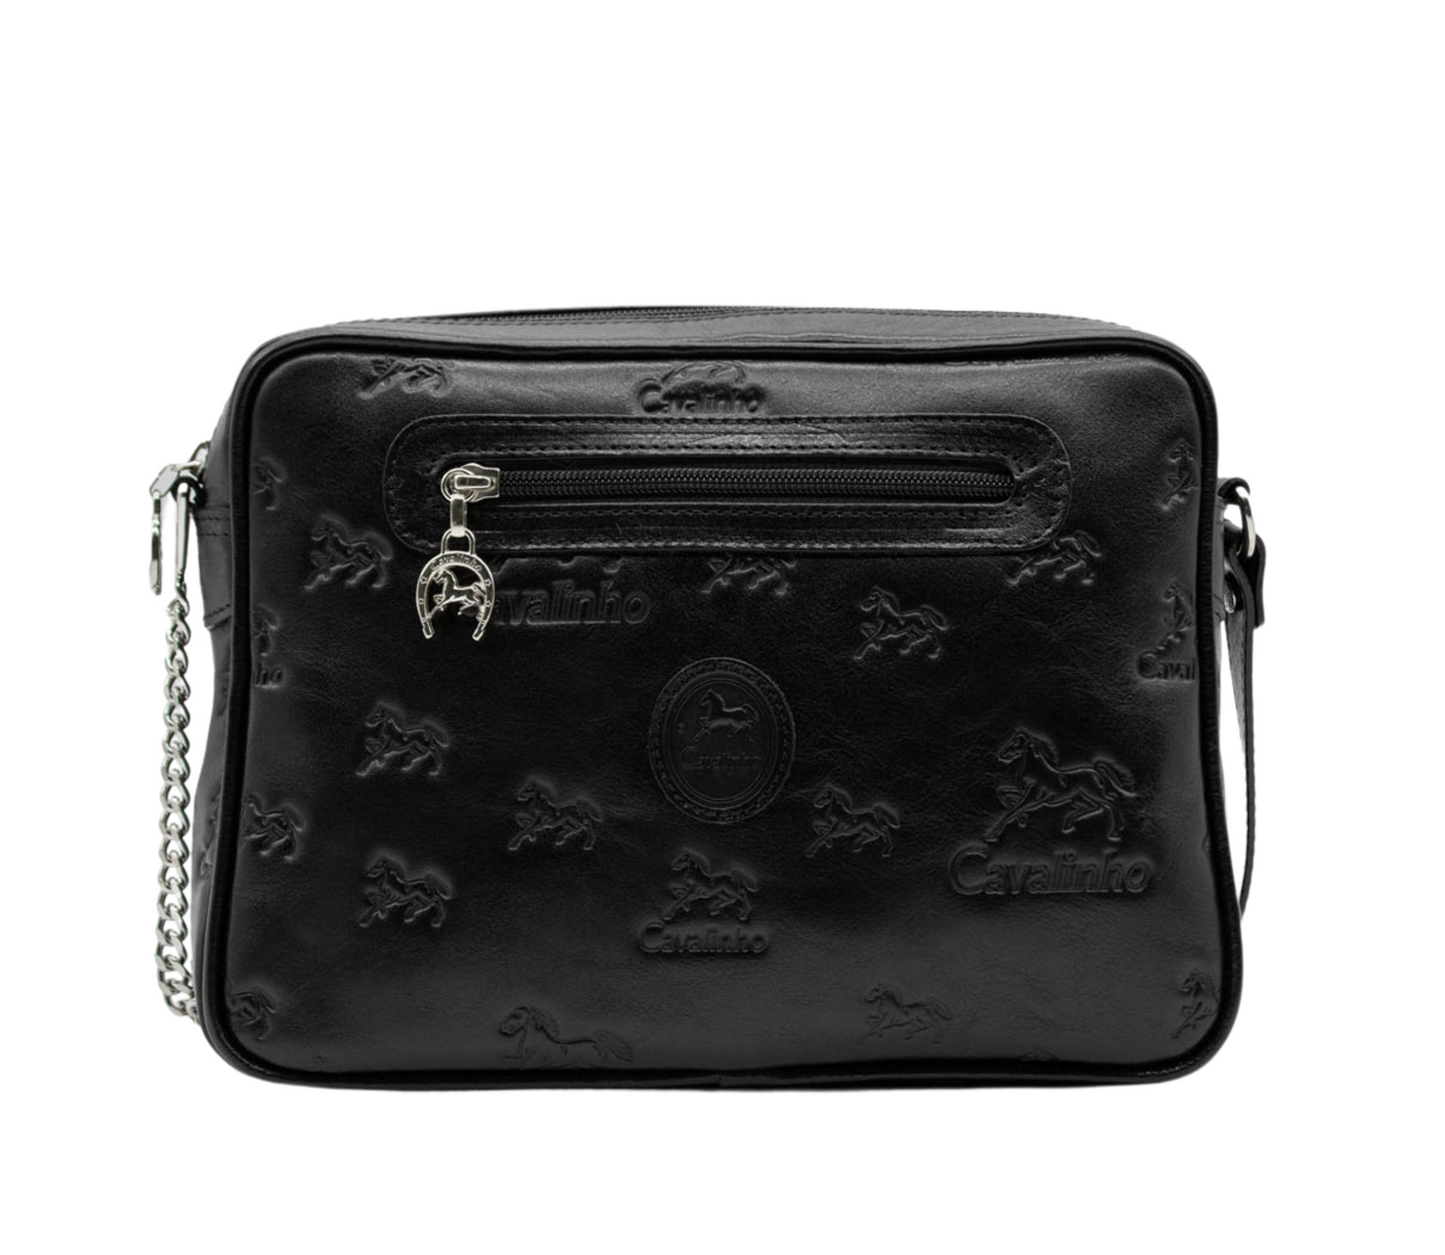 Cavalinho Cavalo Lusitano Leather Crossbody Bag - Black - 18090251.01_1